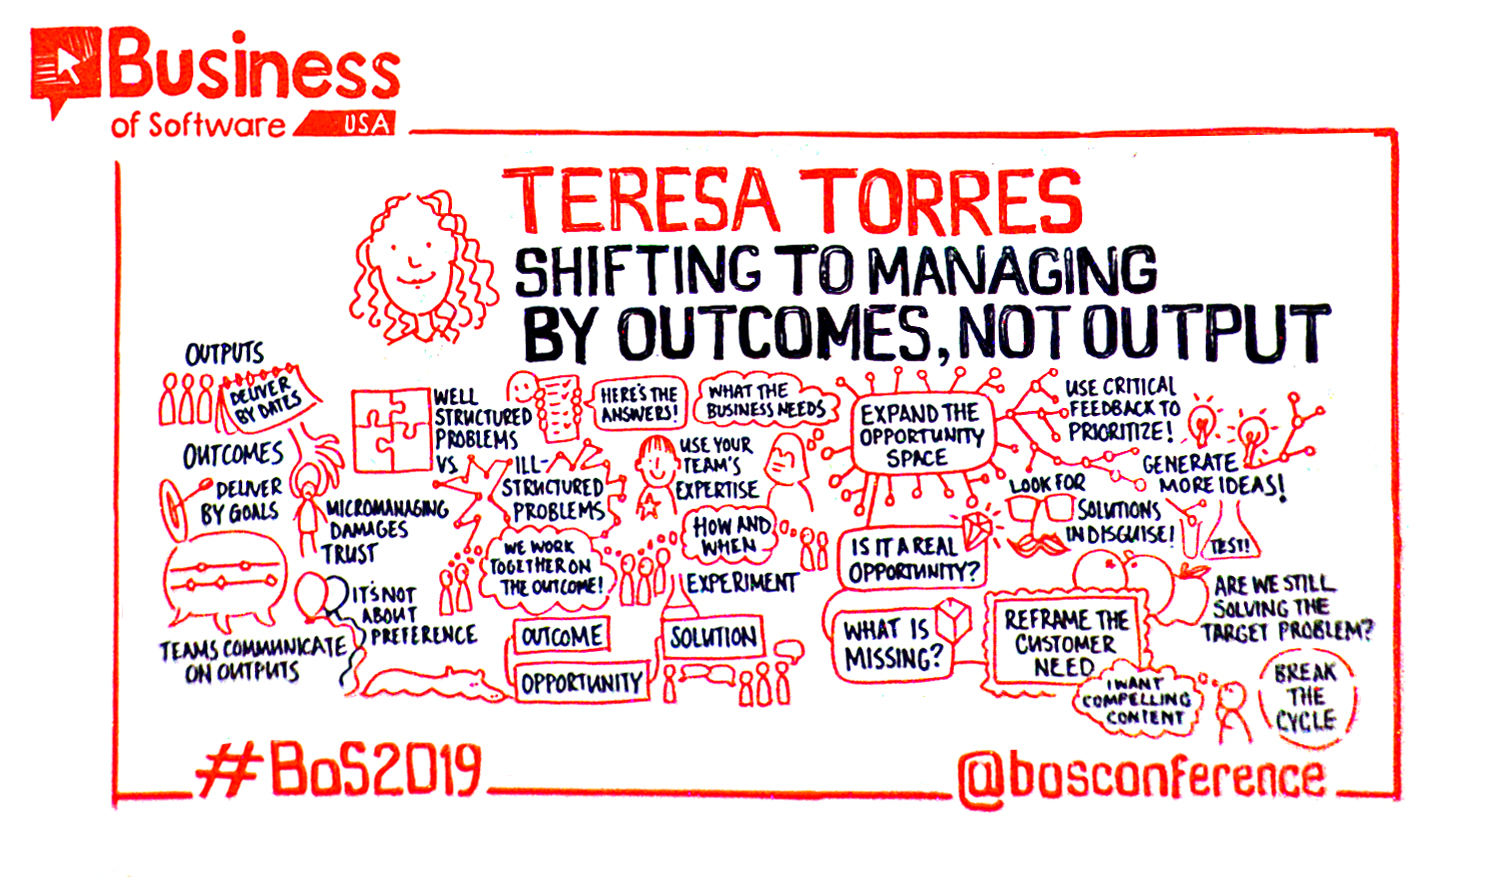 06 Sketch Notes BoS USA 2019 Teresa Torres